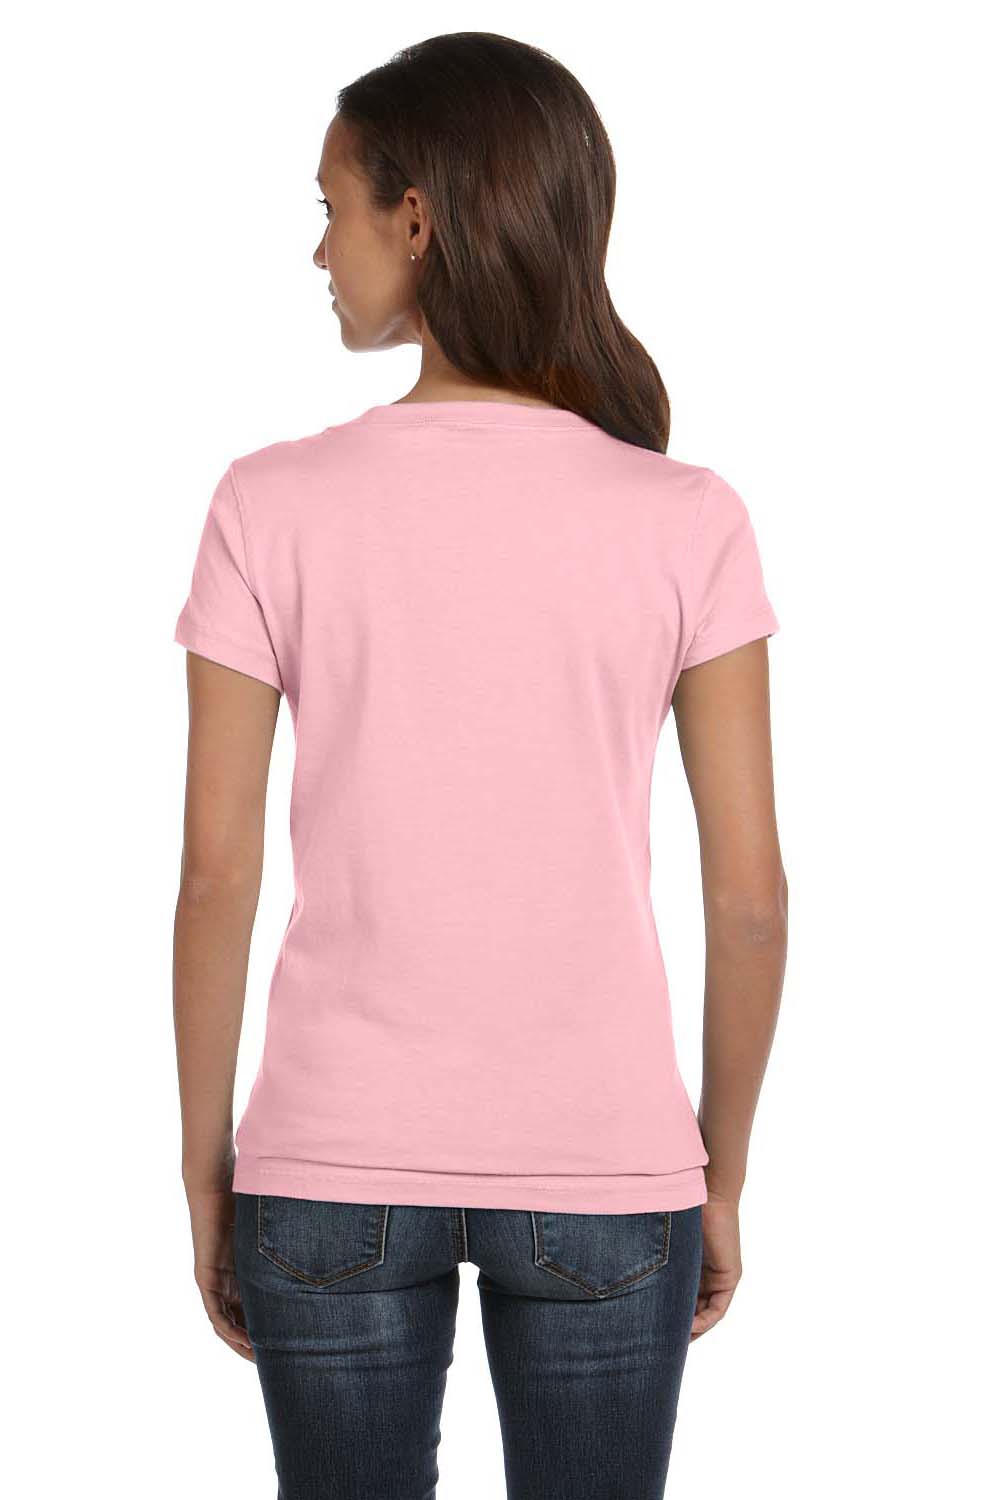 Bella + Canvas B6005/6005 Womens Jersey Short Sleeve V-Neck T-Shirt Pink Model Back